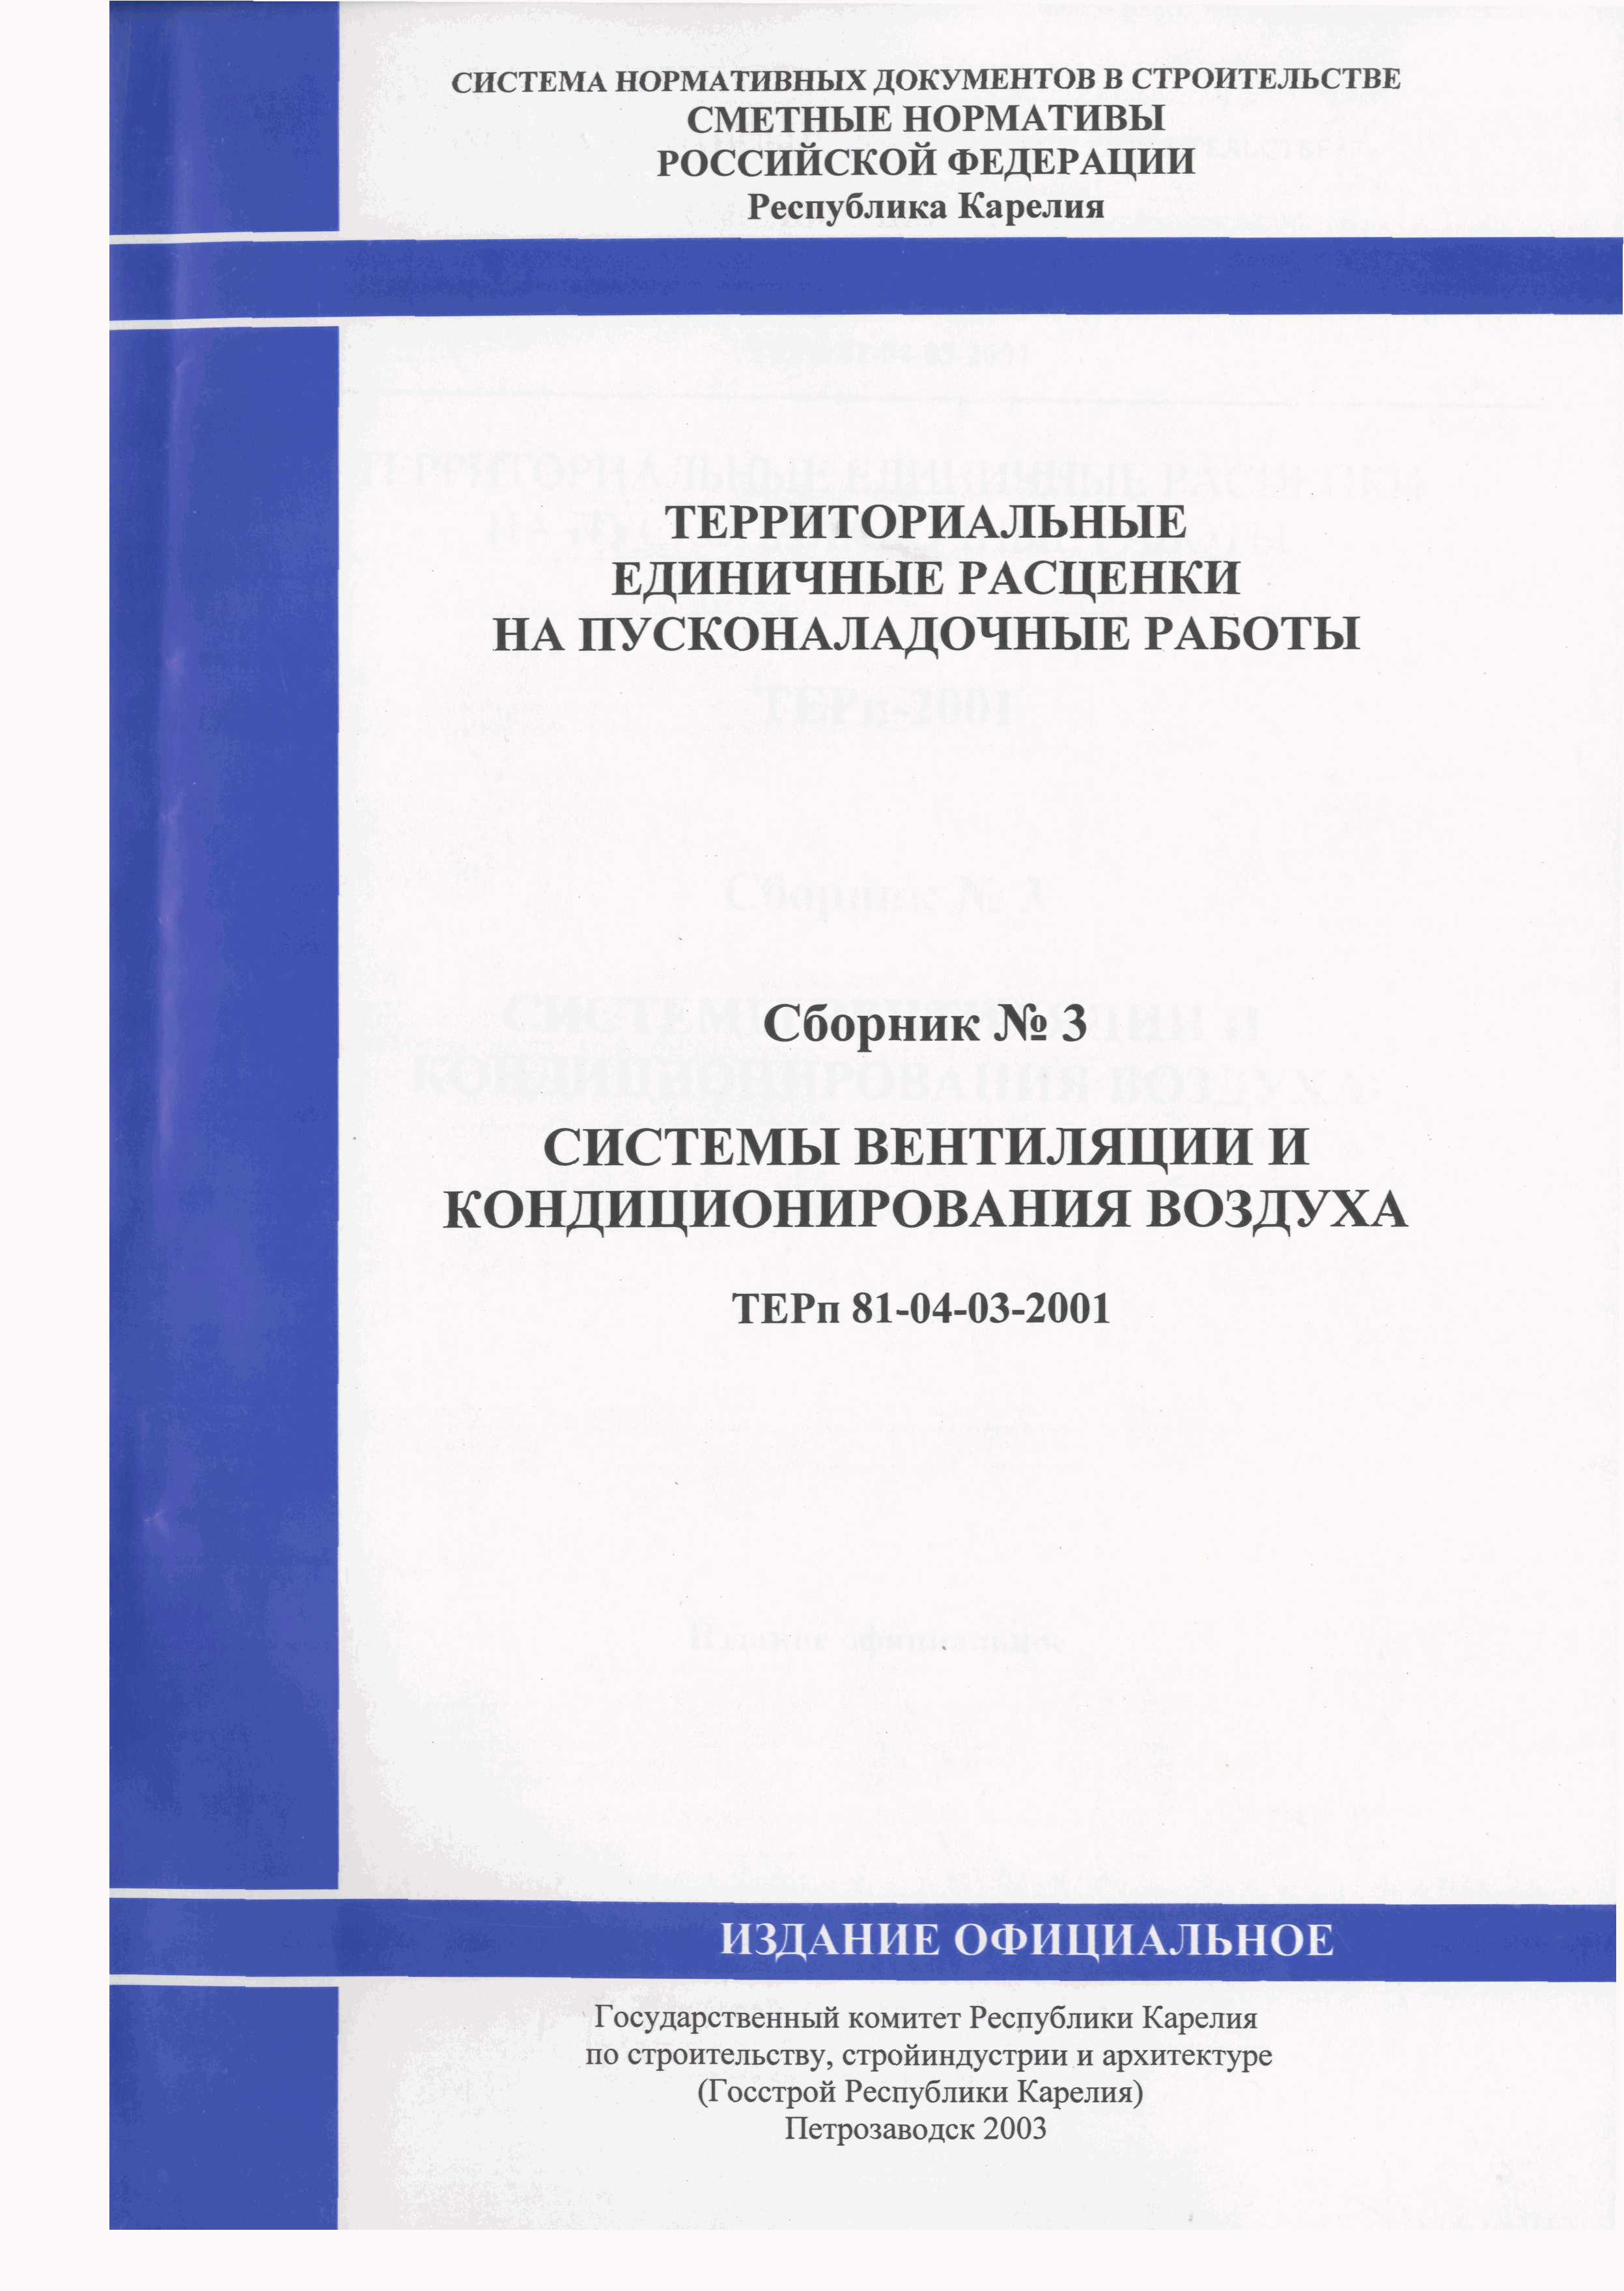 ТЕРп Республика Карелия 2001-03